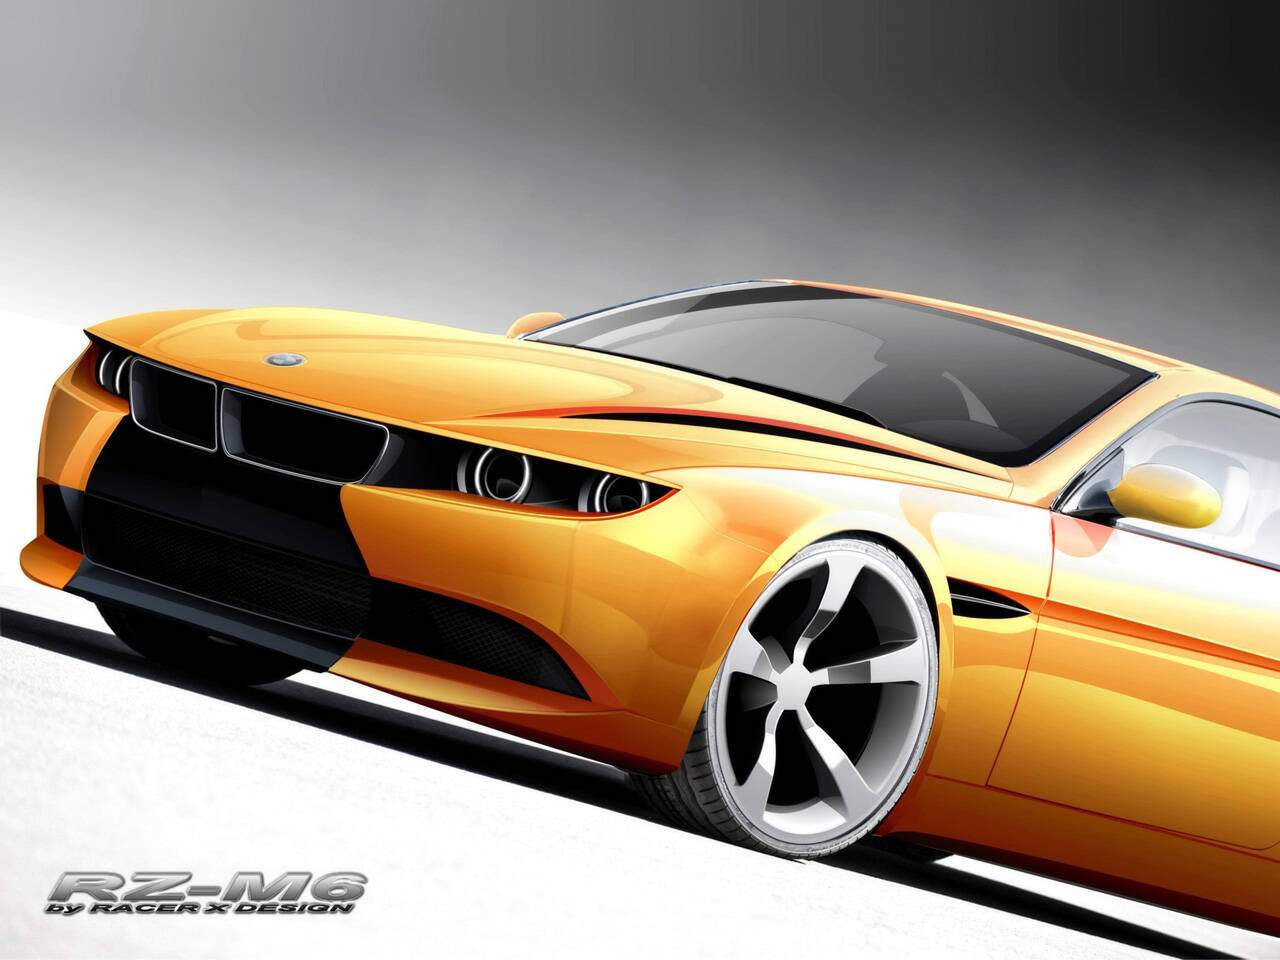 Racer X Design BMW RZ-M6 (2009),  ajouté par bertranddac